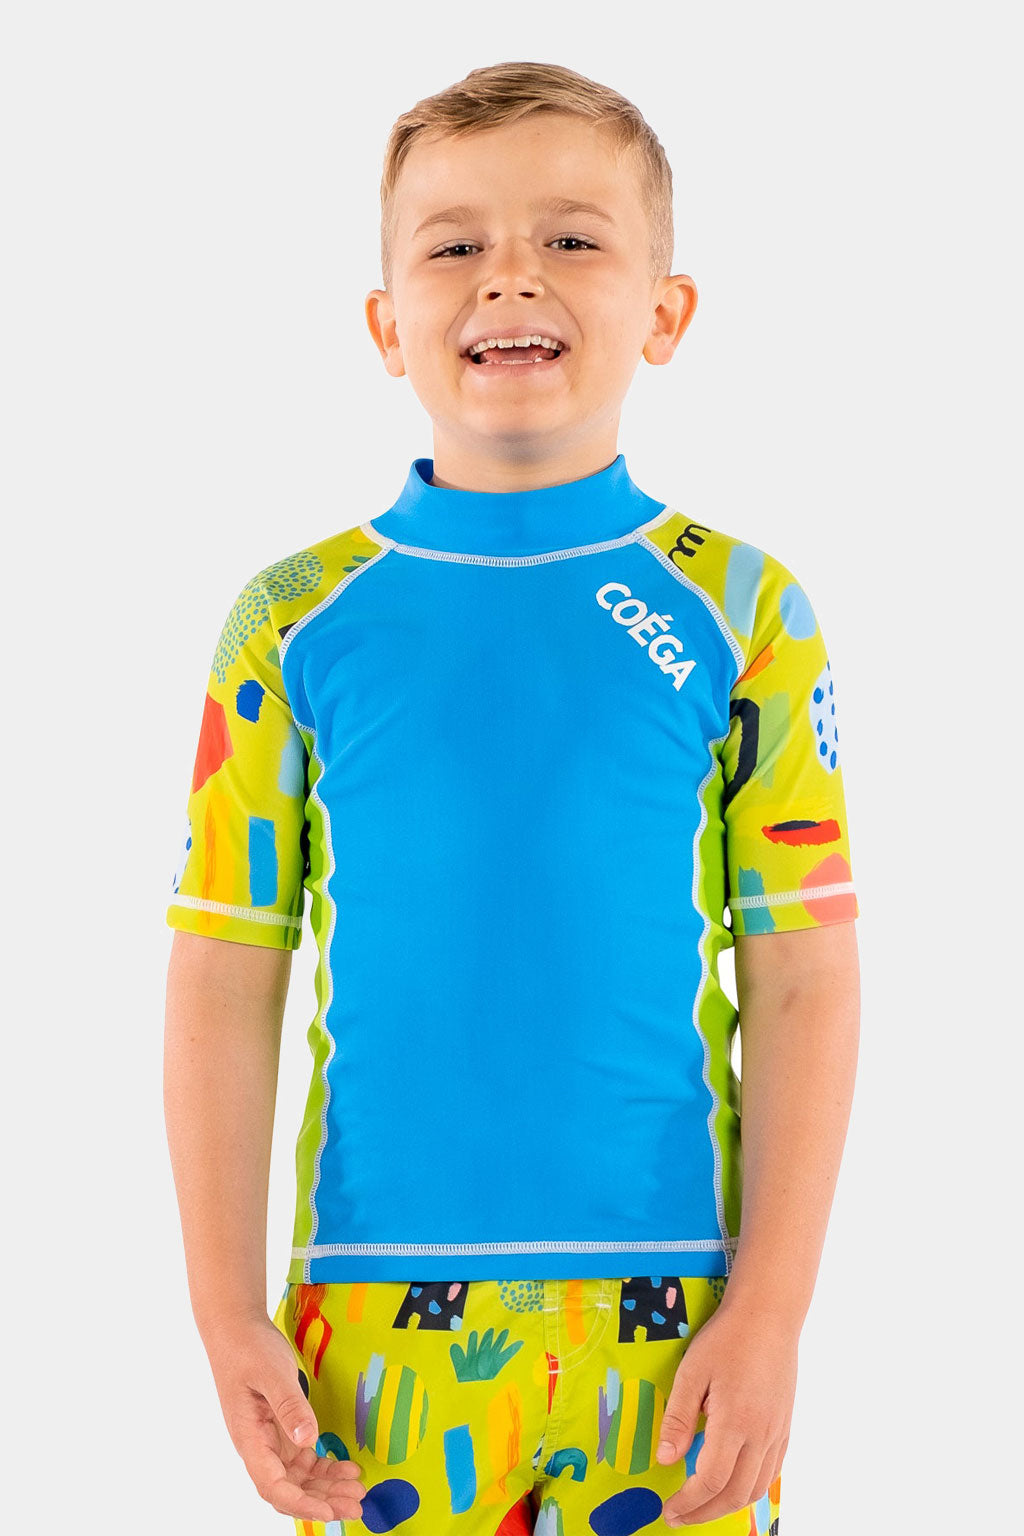 Coega - Boys Kids Rashguard - Short Sleeve